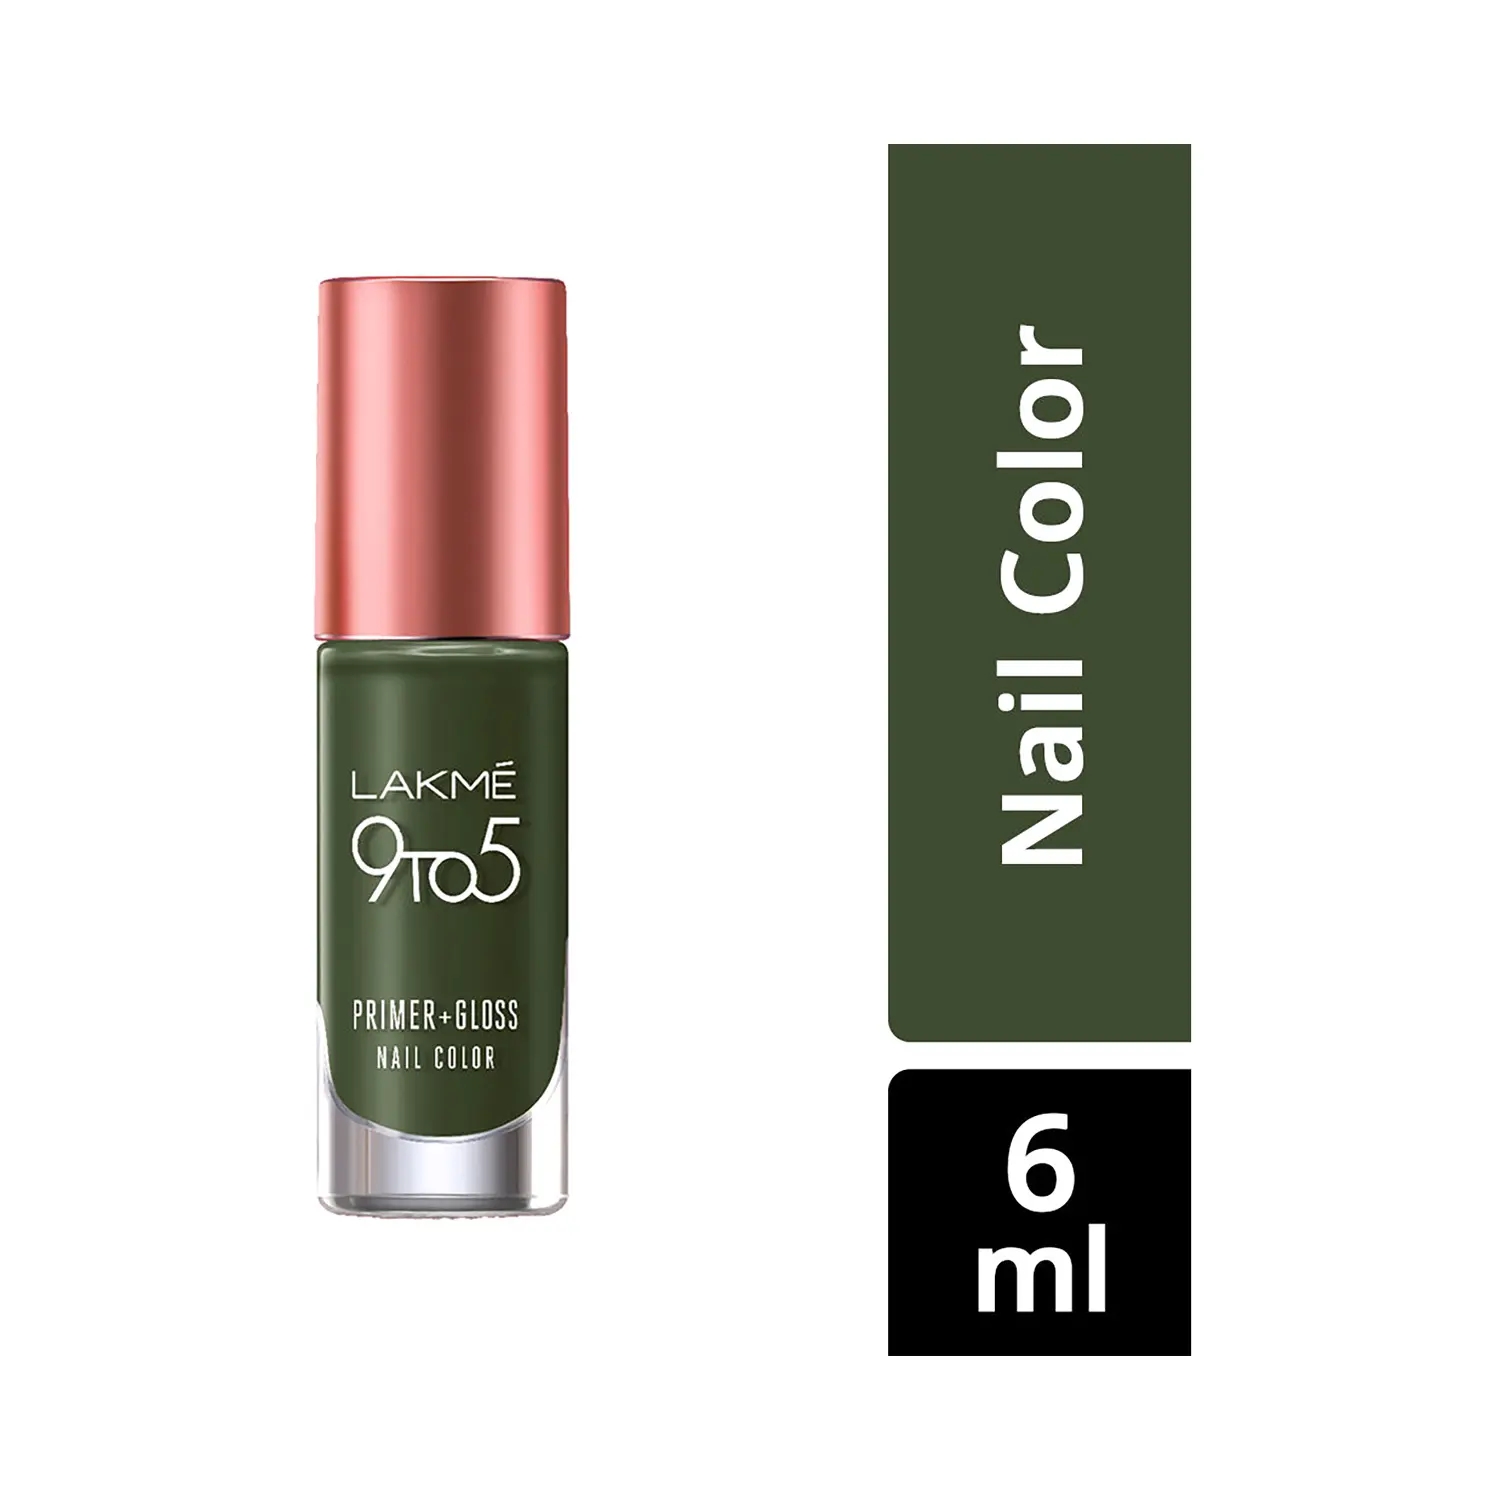 Lakme | Lakme 9To5 Primer + Gloss Nail Color - Olive Green 6ml